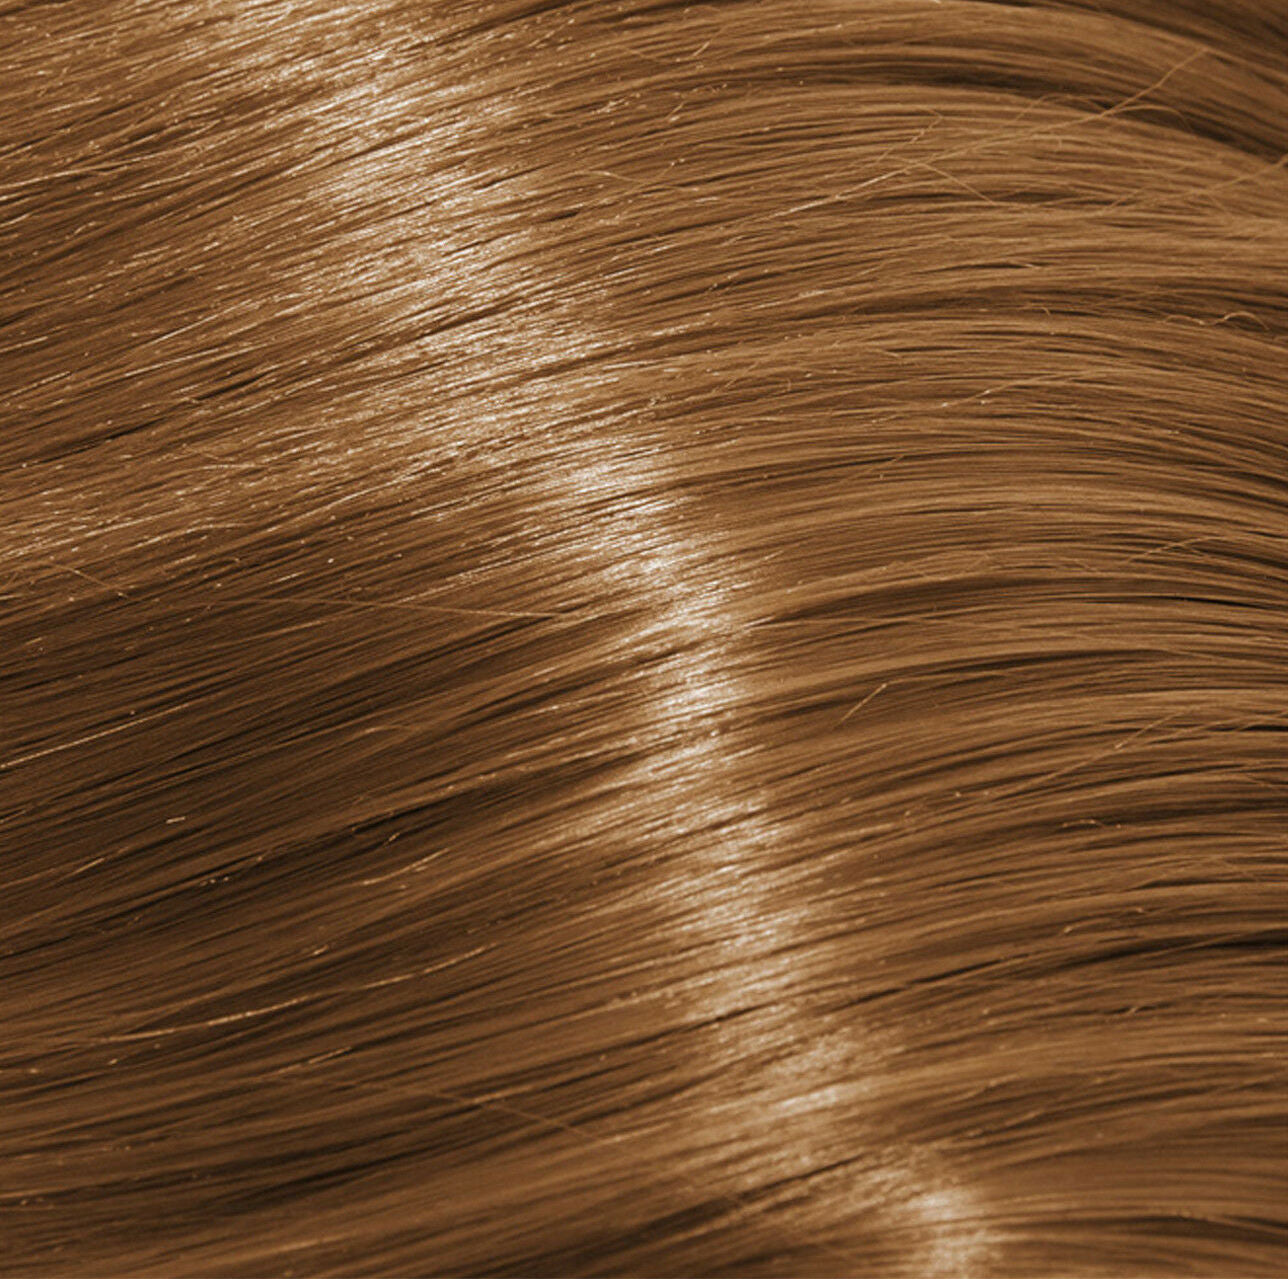 XP100 Intense Radiance Permanent Hair Colour - 10.1 Lightest Ash Blonde 100ml